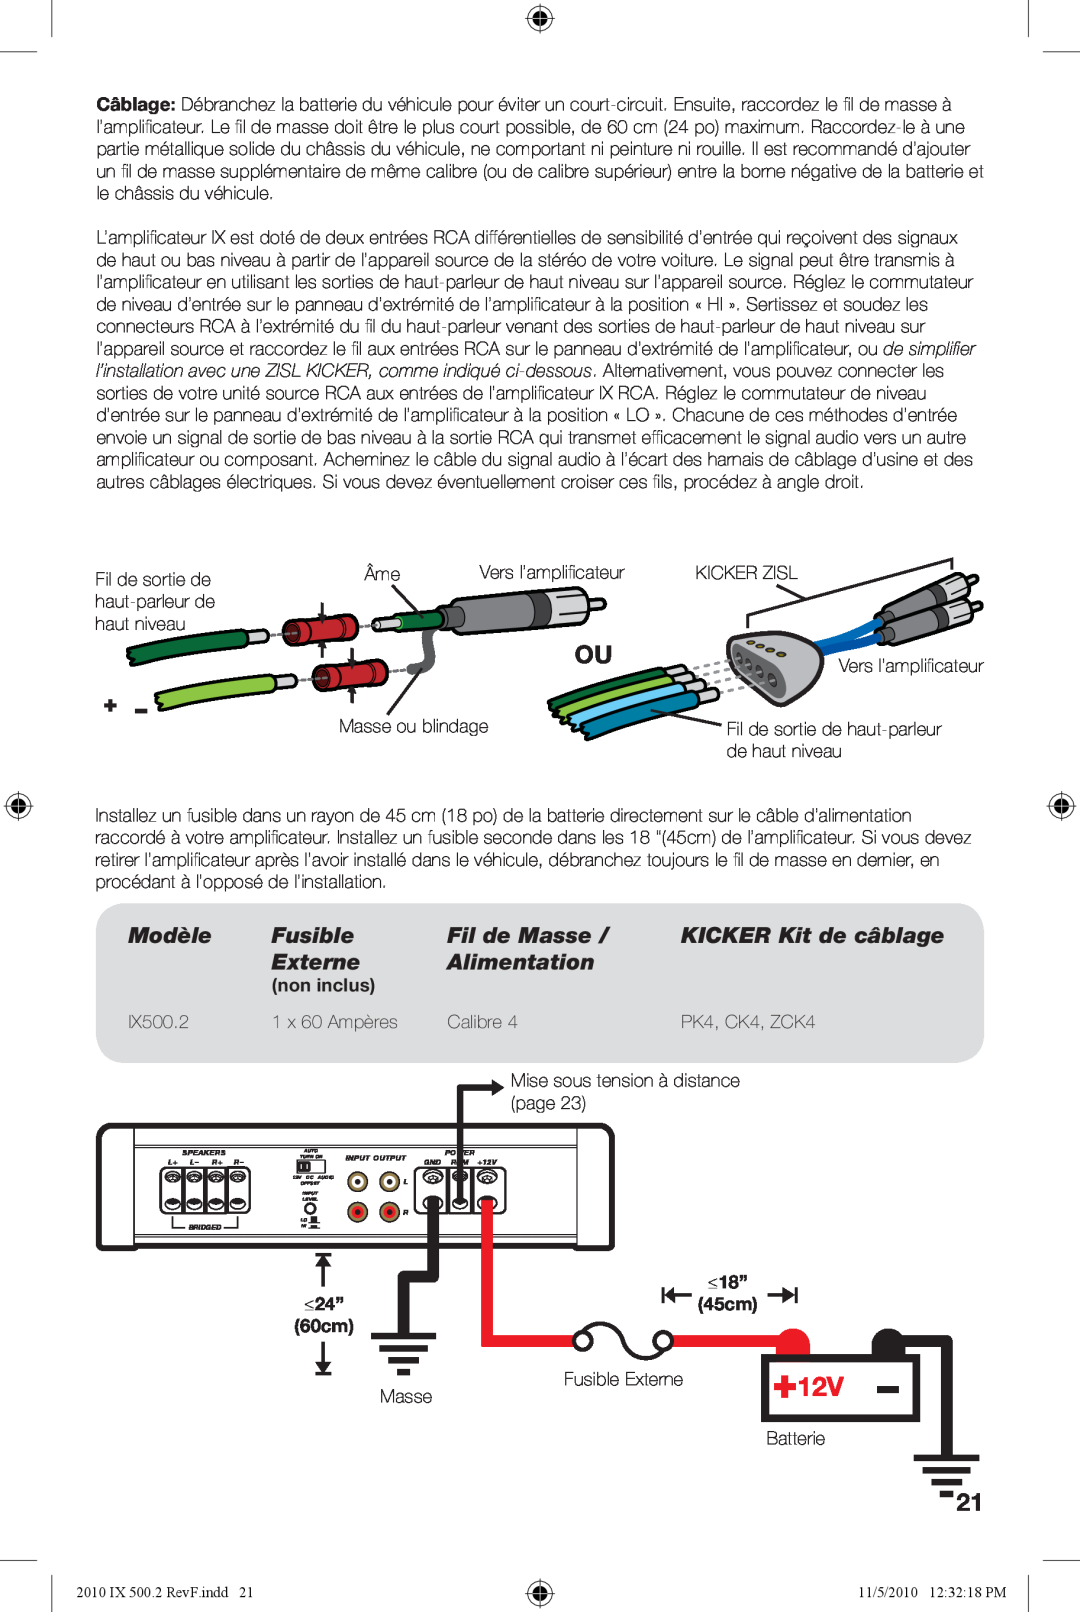 Kicker IX500.2 manual Fil de Masse, KICKER Kit de câblage, Externe, Alimentation, Modèle, Fusible 